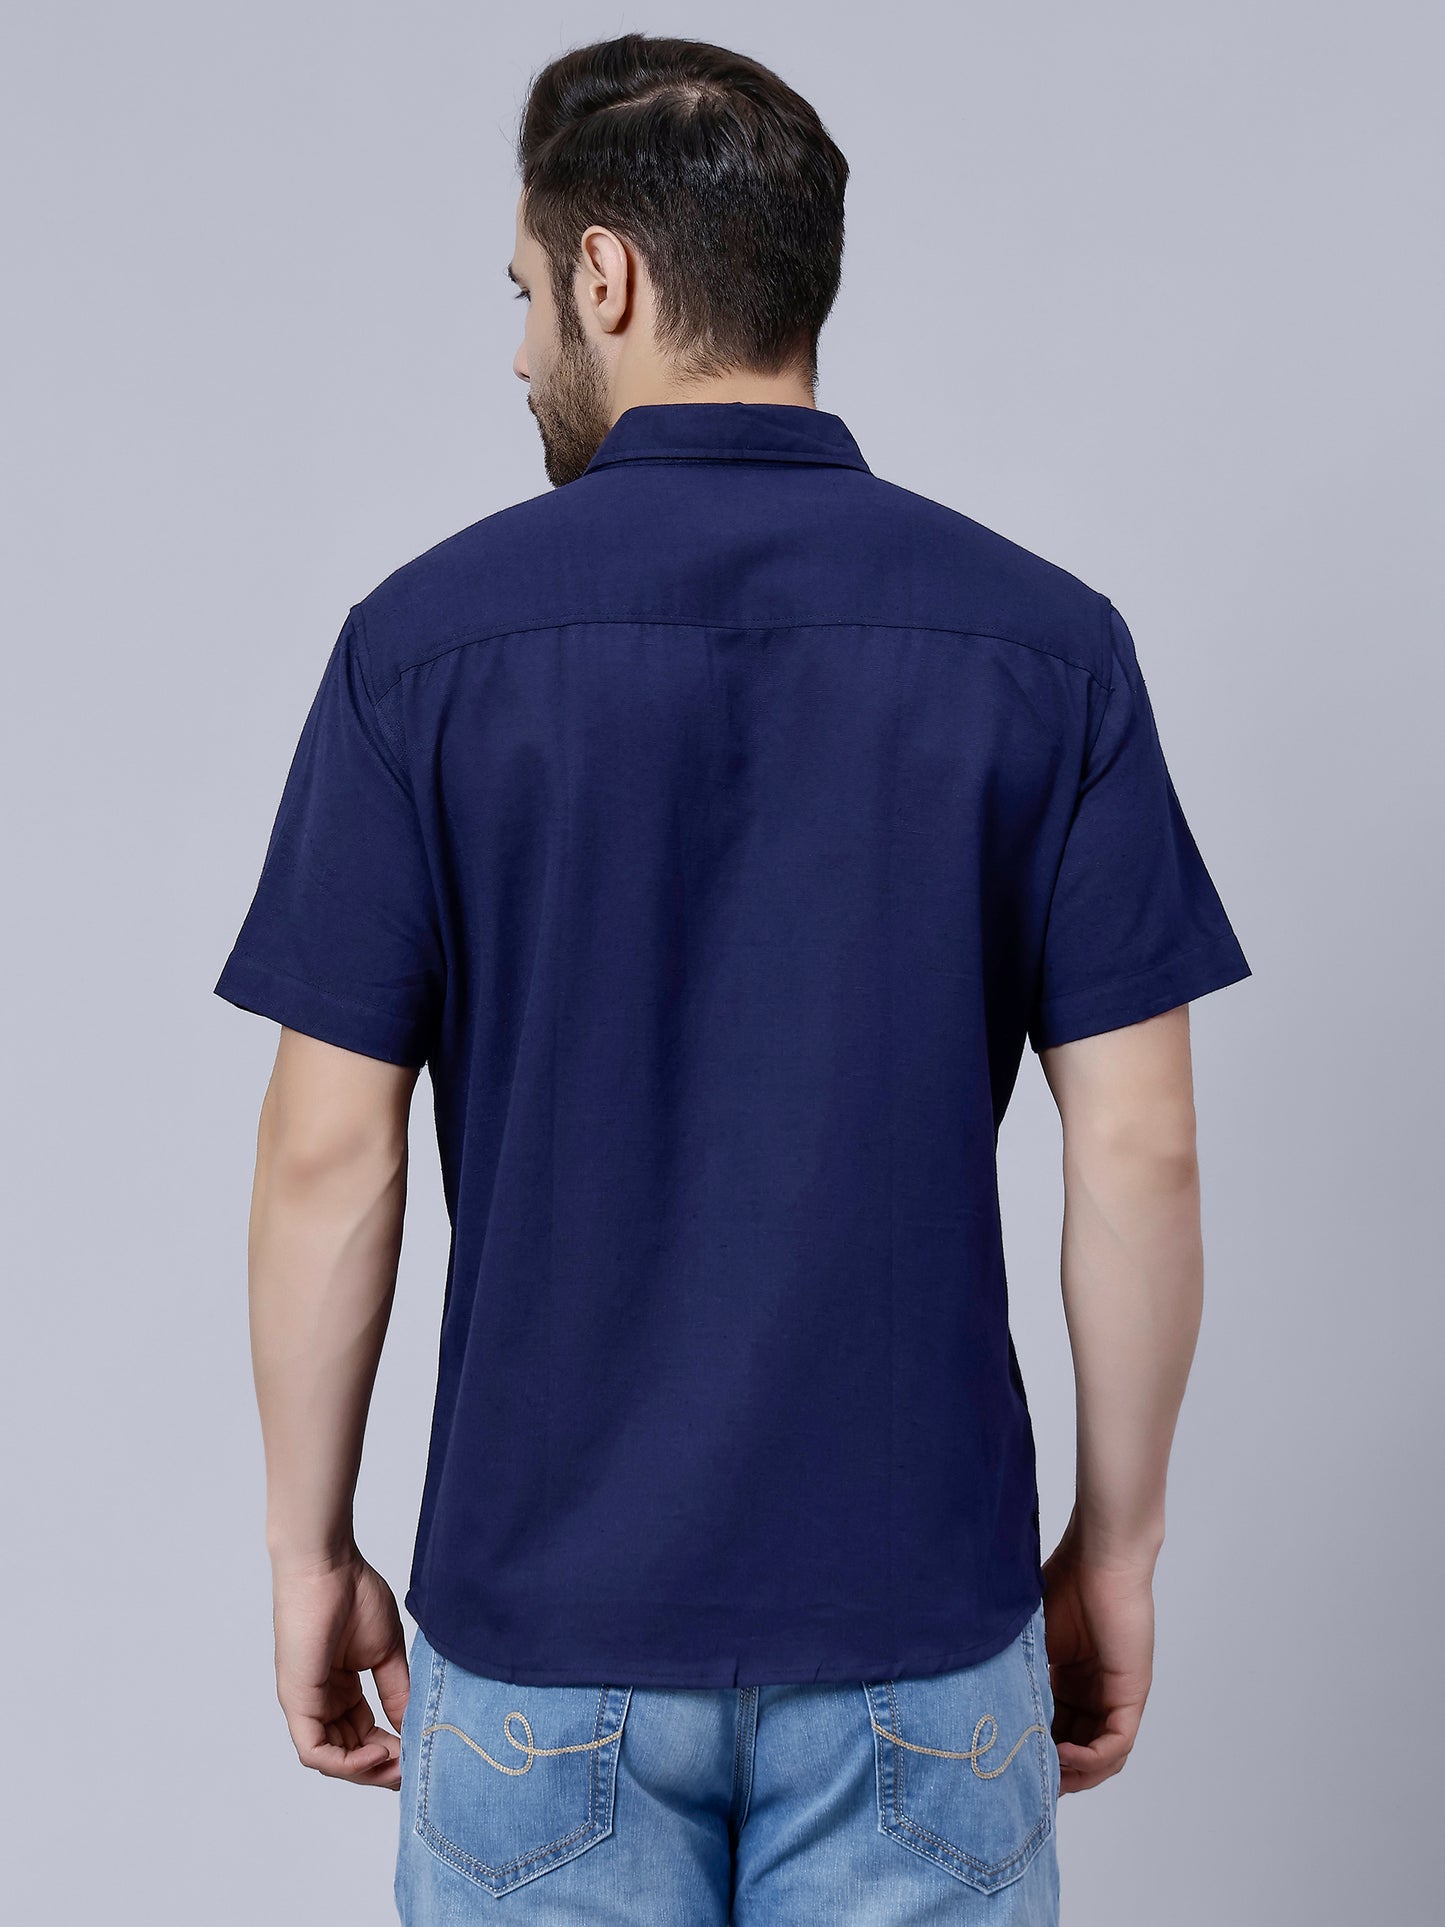 Linen Shirt for Men- Navy